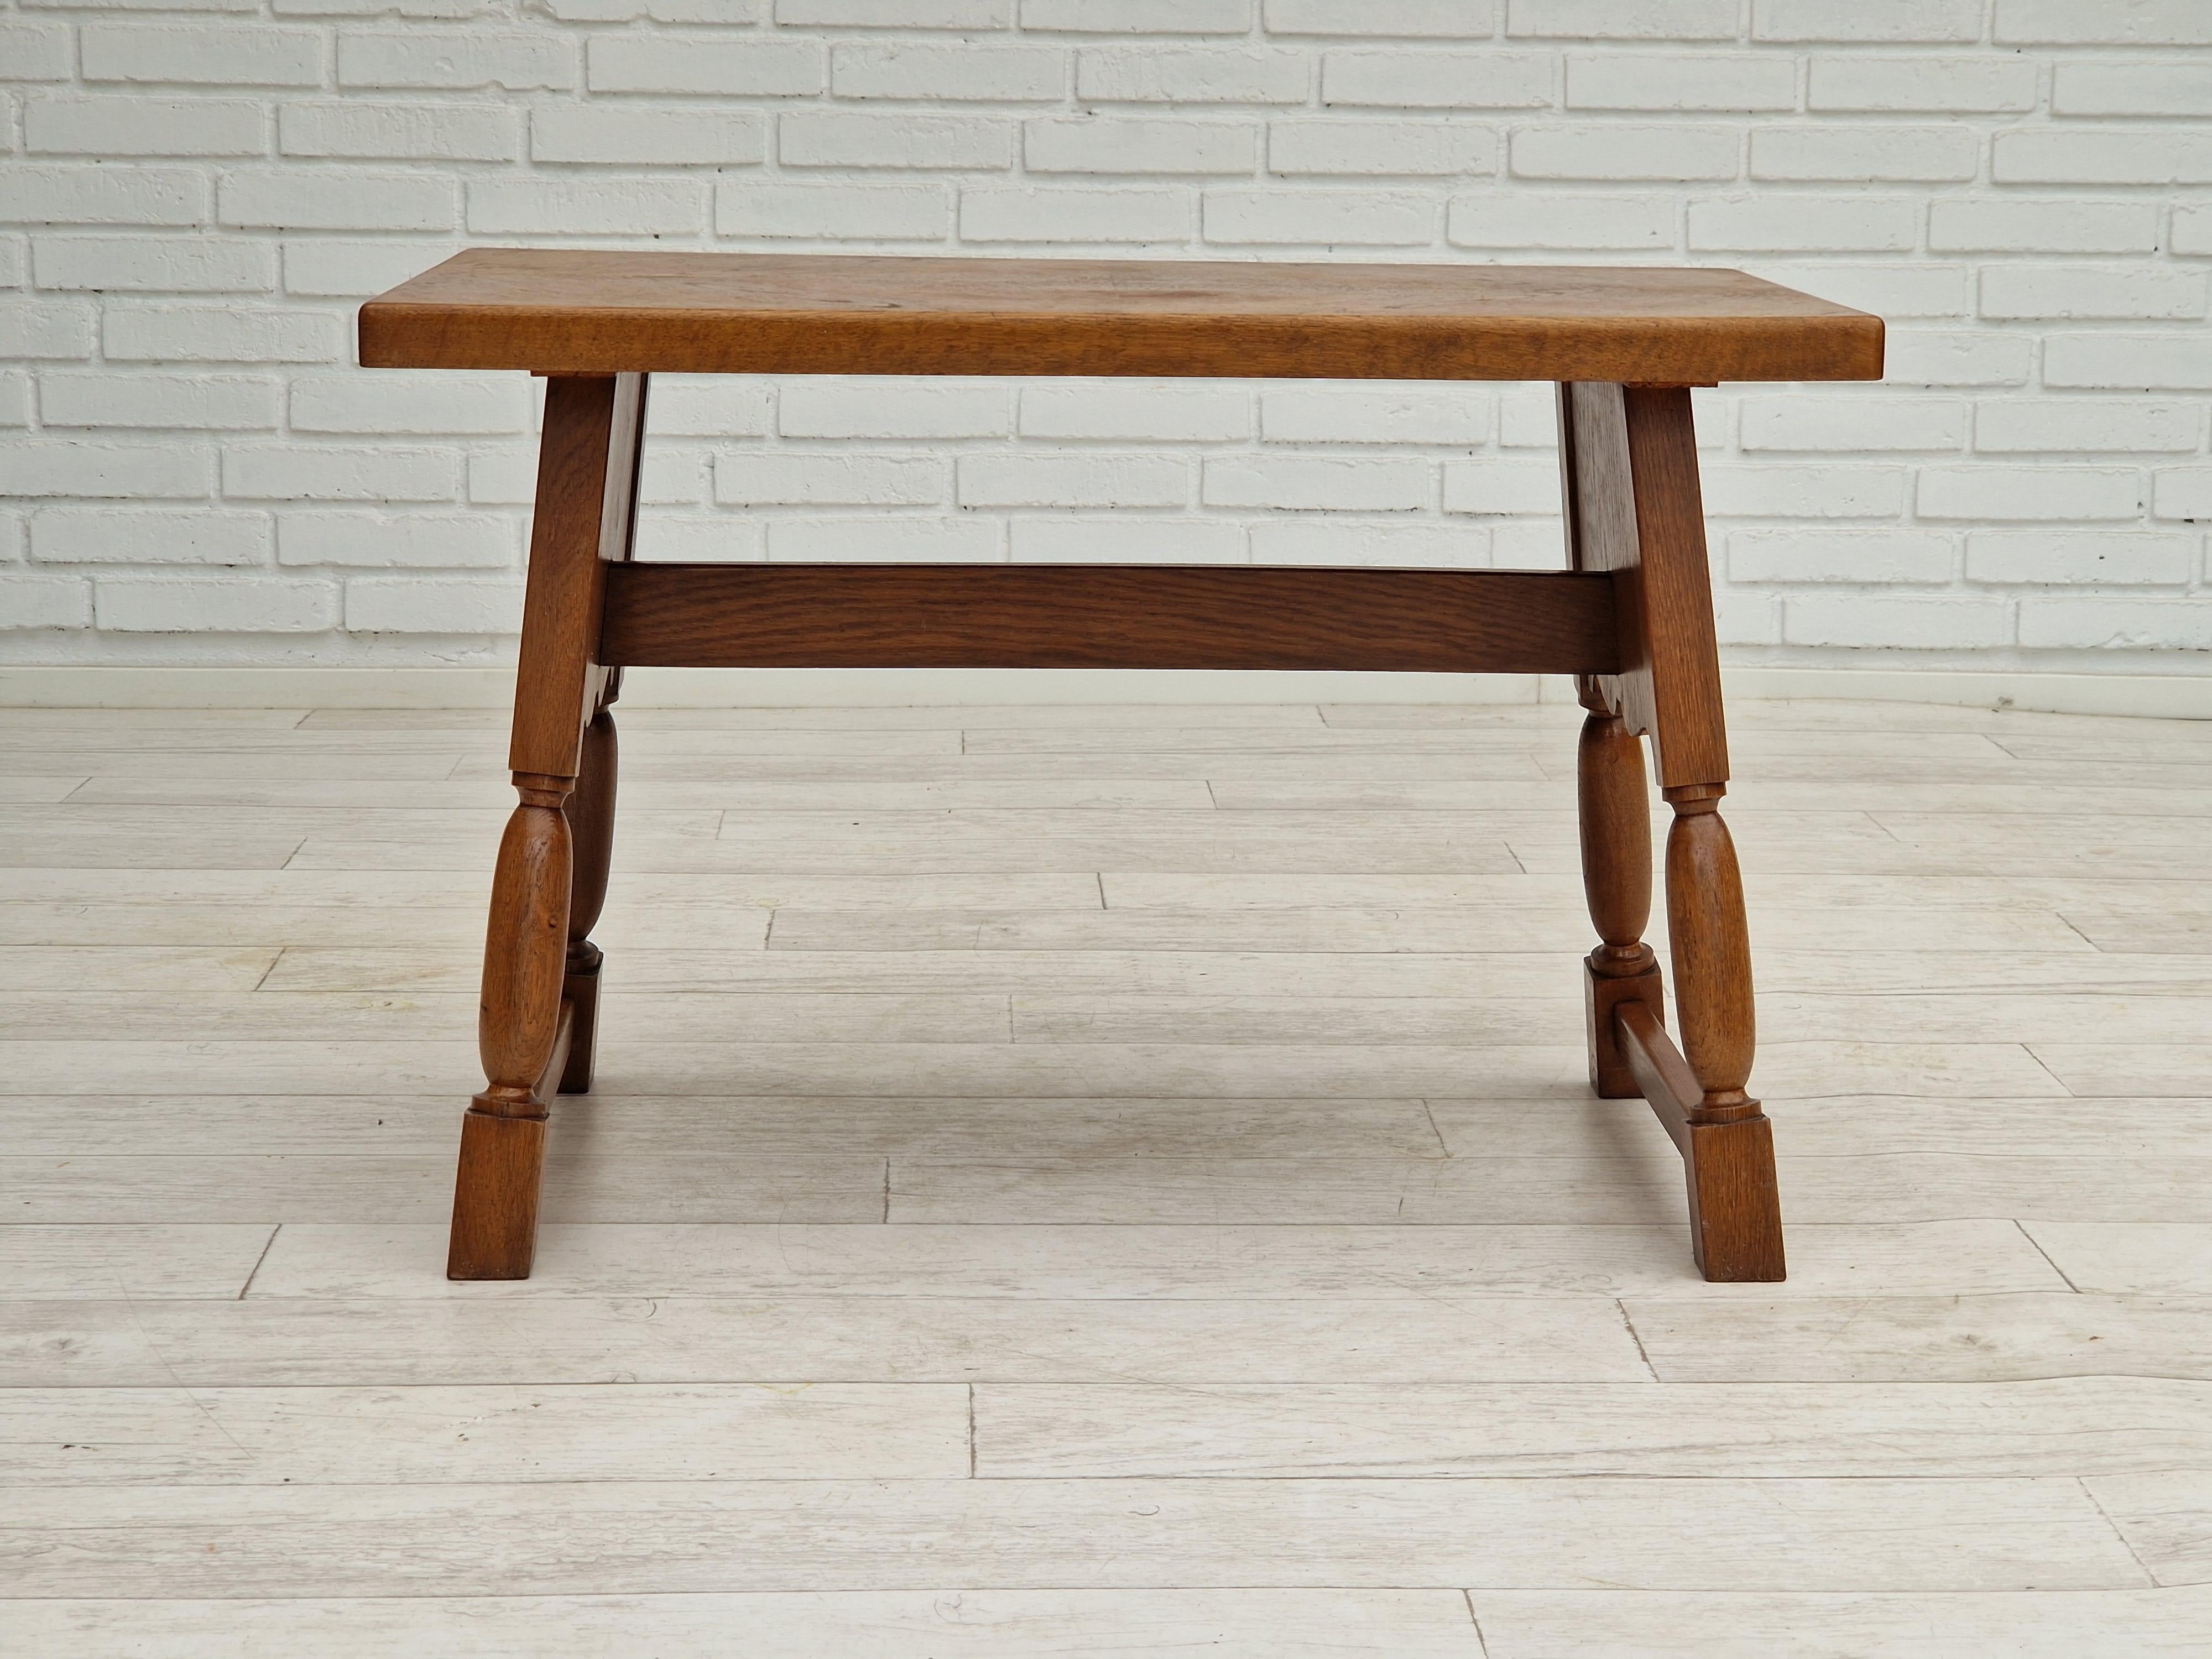 Scandinavian Modern 1950s, Danish Design, Oak Wood Coffee Table, Original Condition For Sale